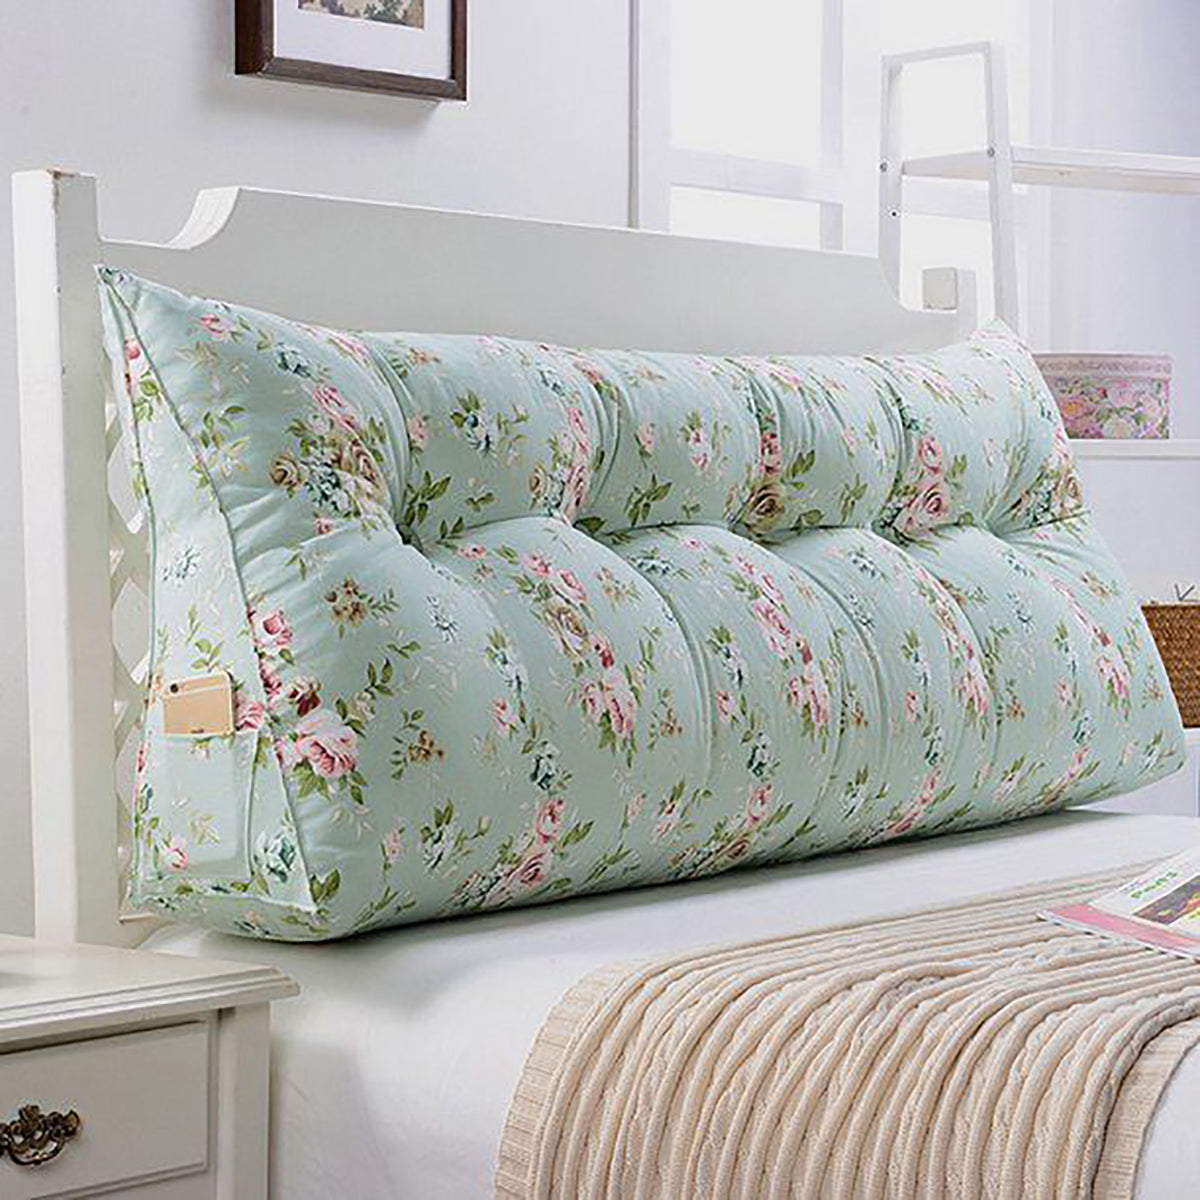 Bed Wedge Cushion lumbar pillow support long triangle backrest headboard